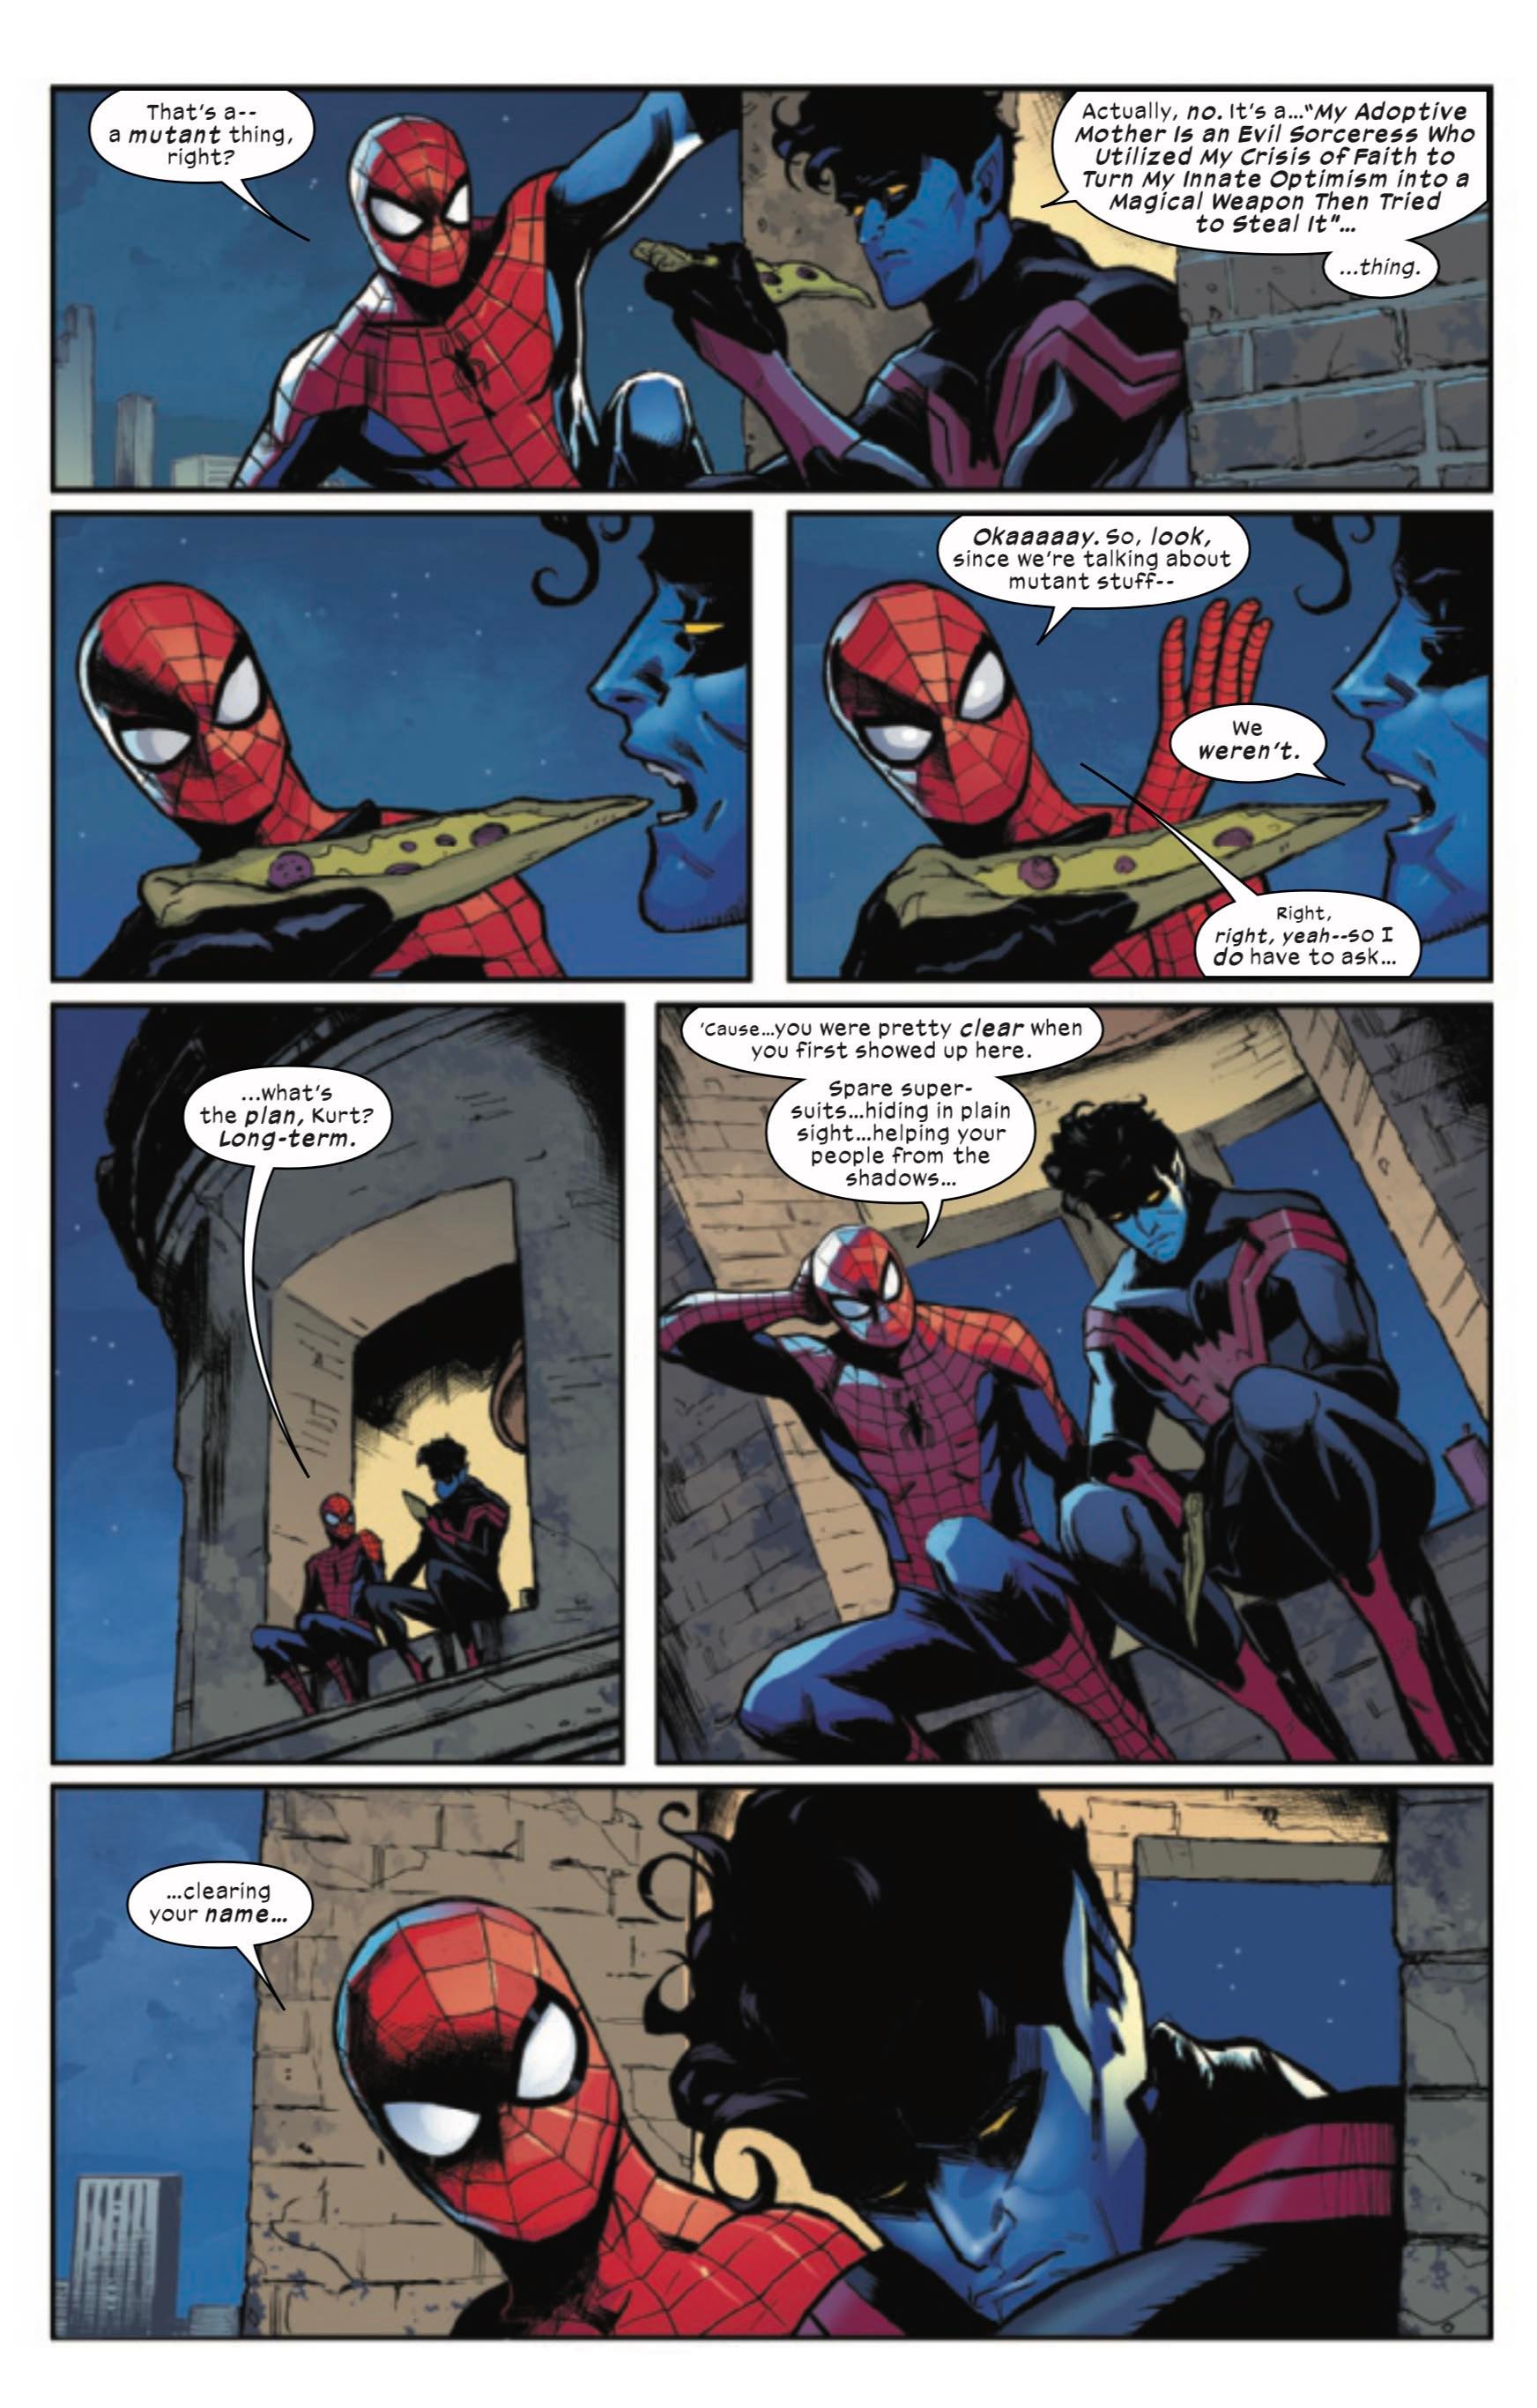 Spider-Man lets Nightcrawler use his identity